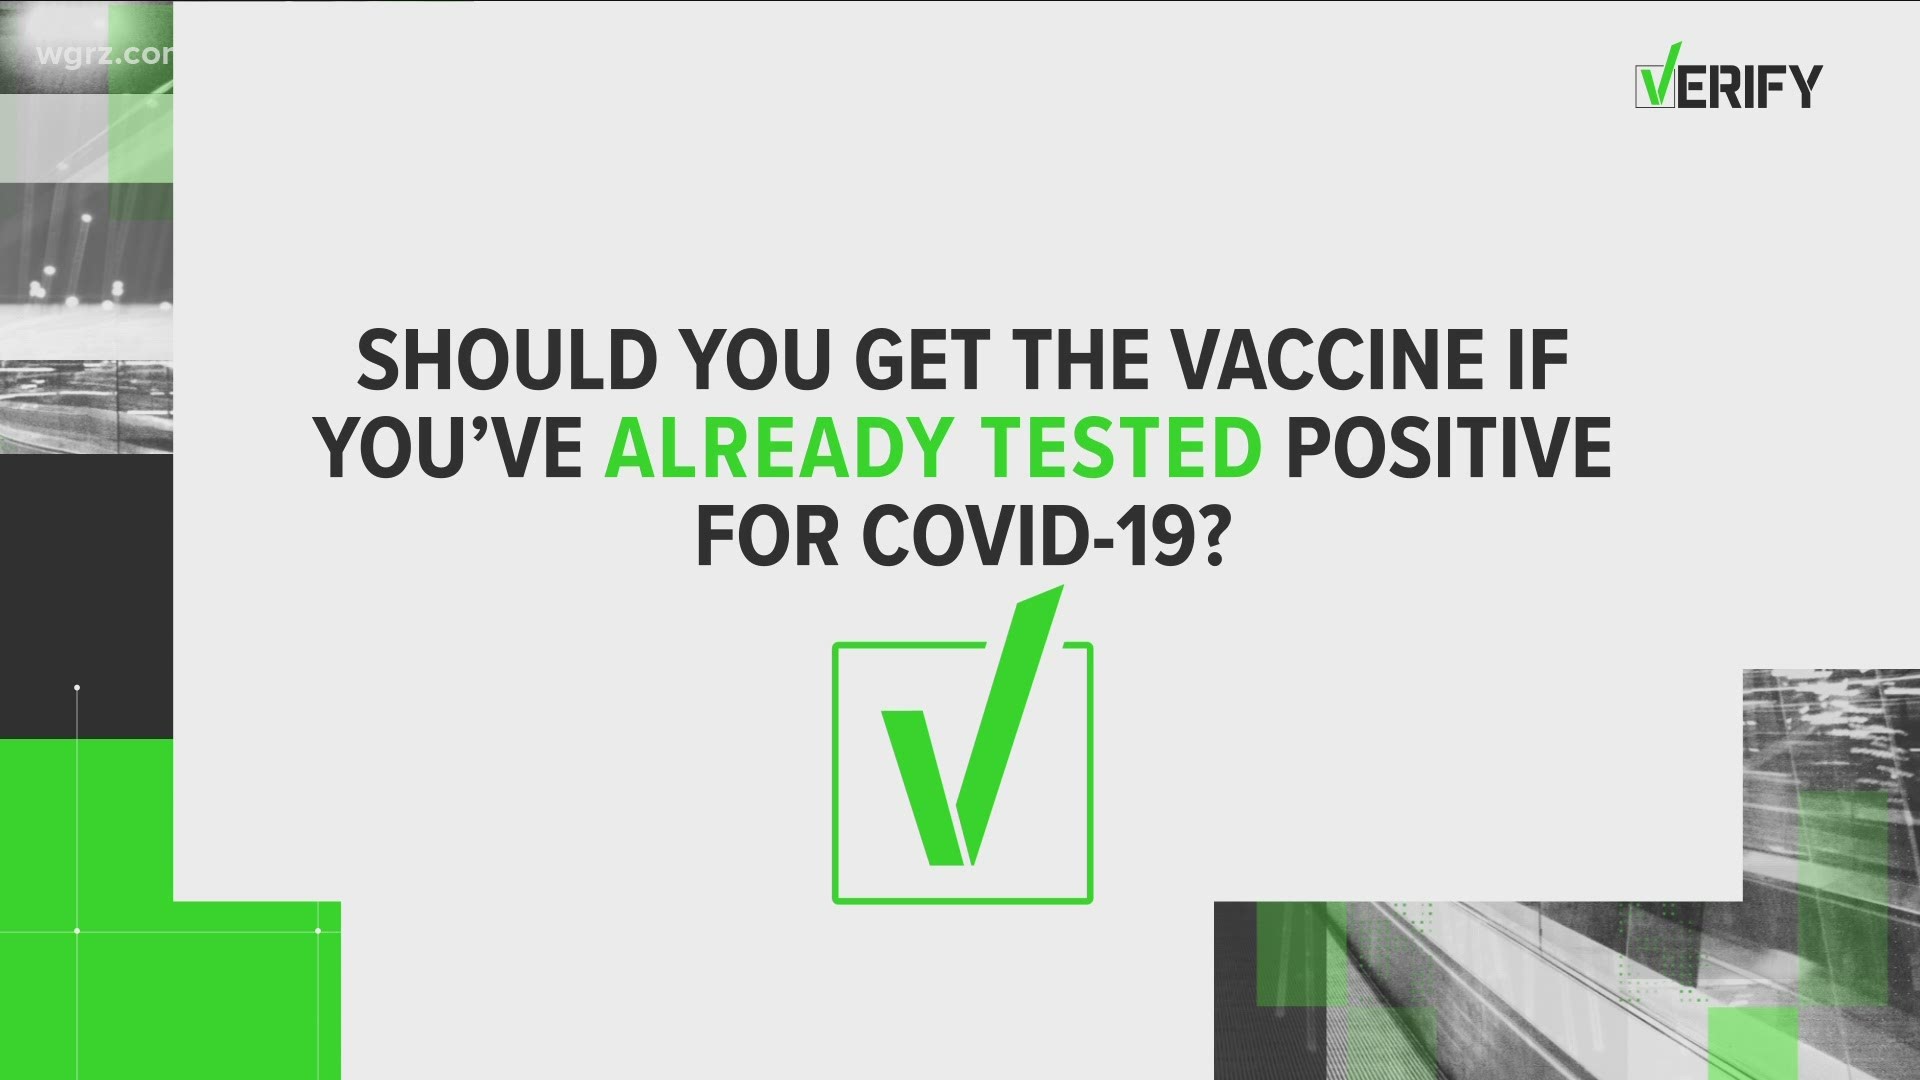 Verify team looks into should you get the vaccine